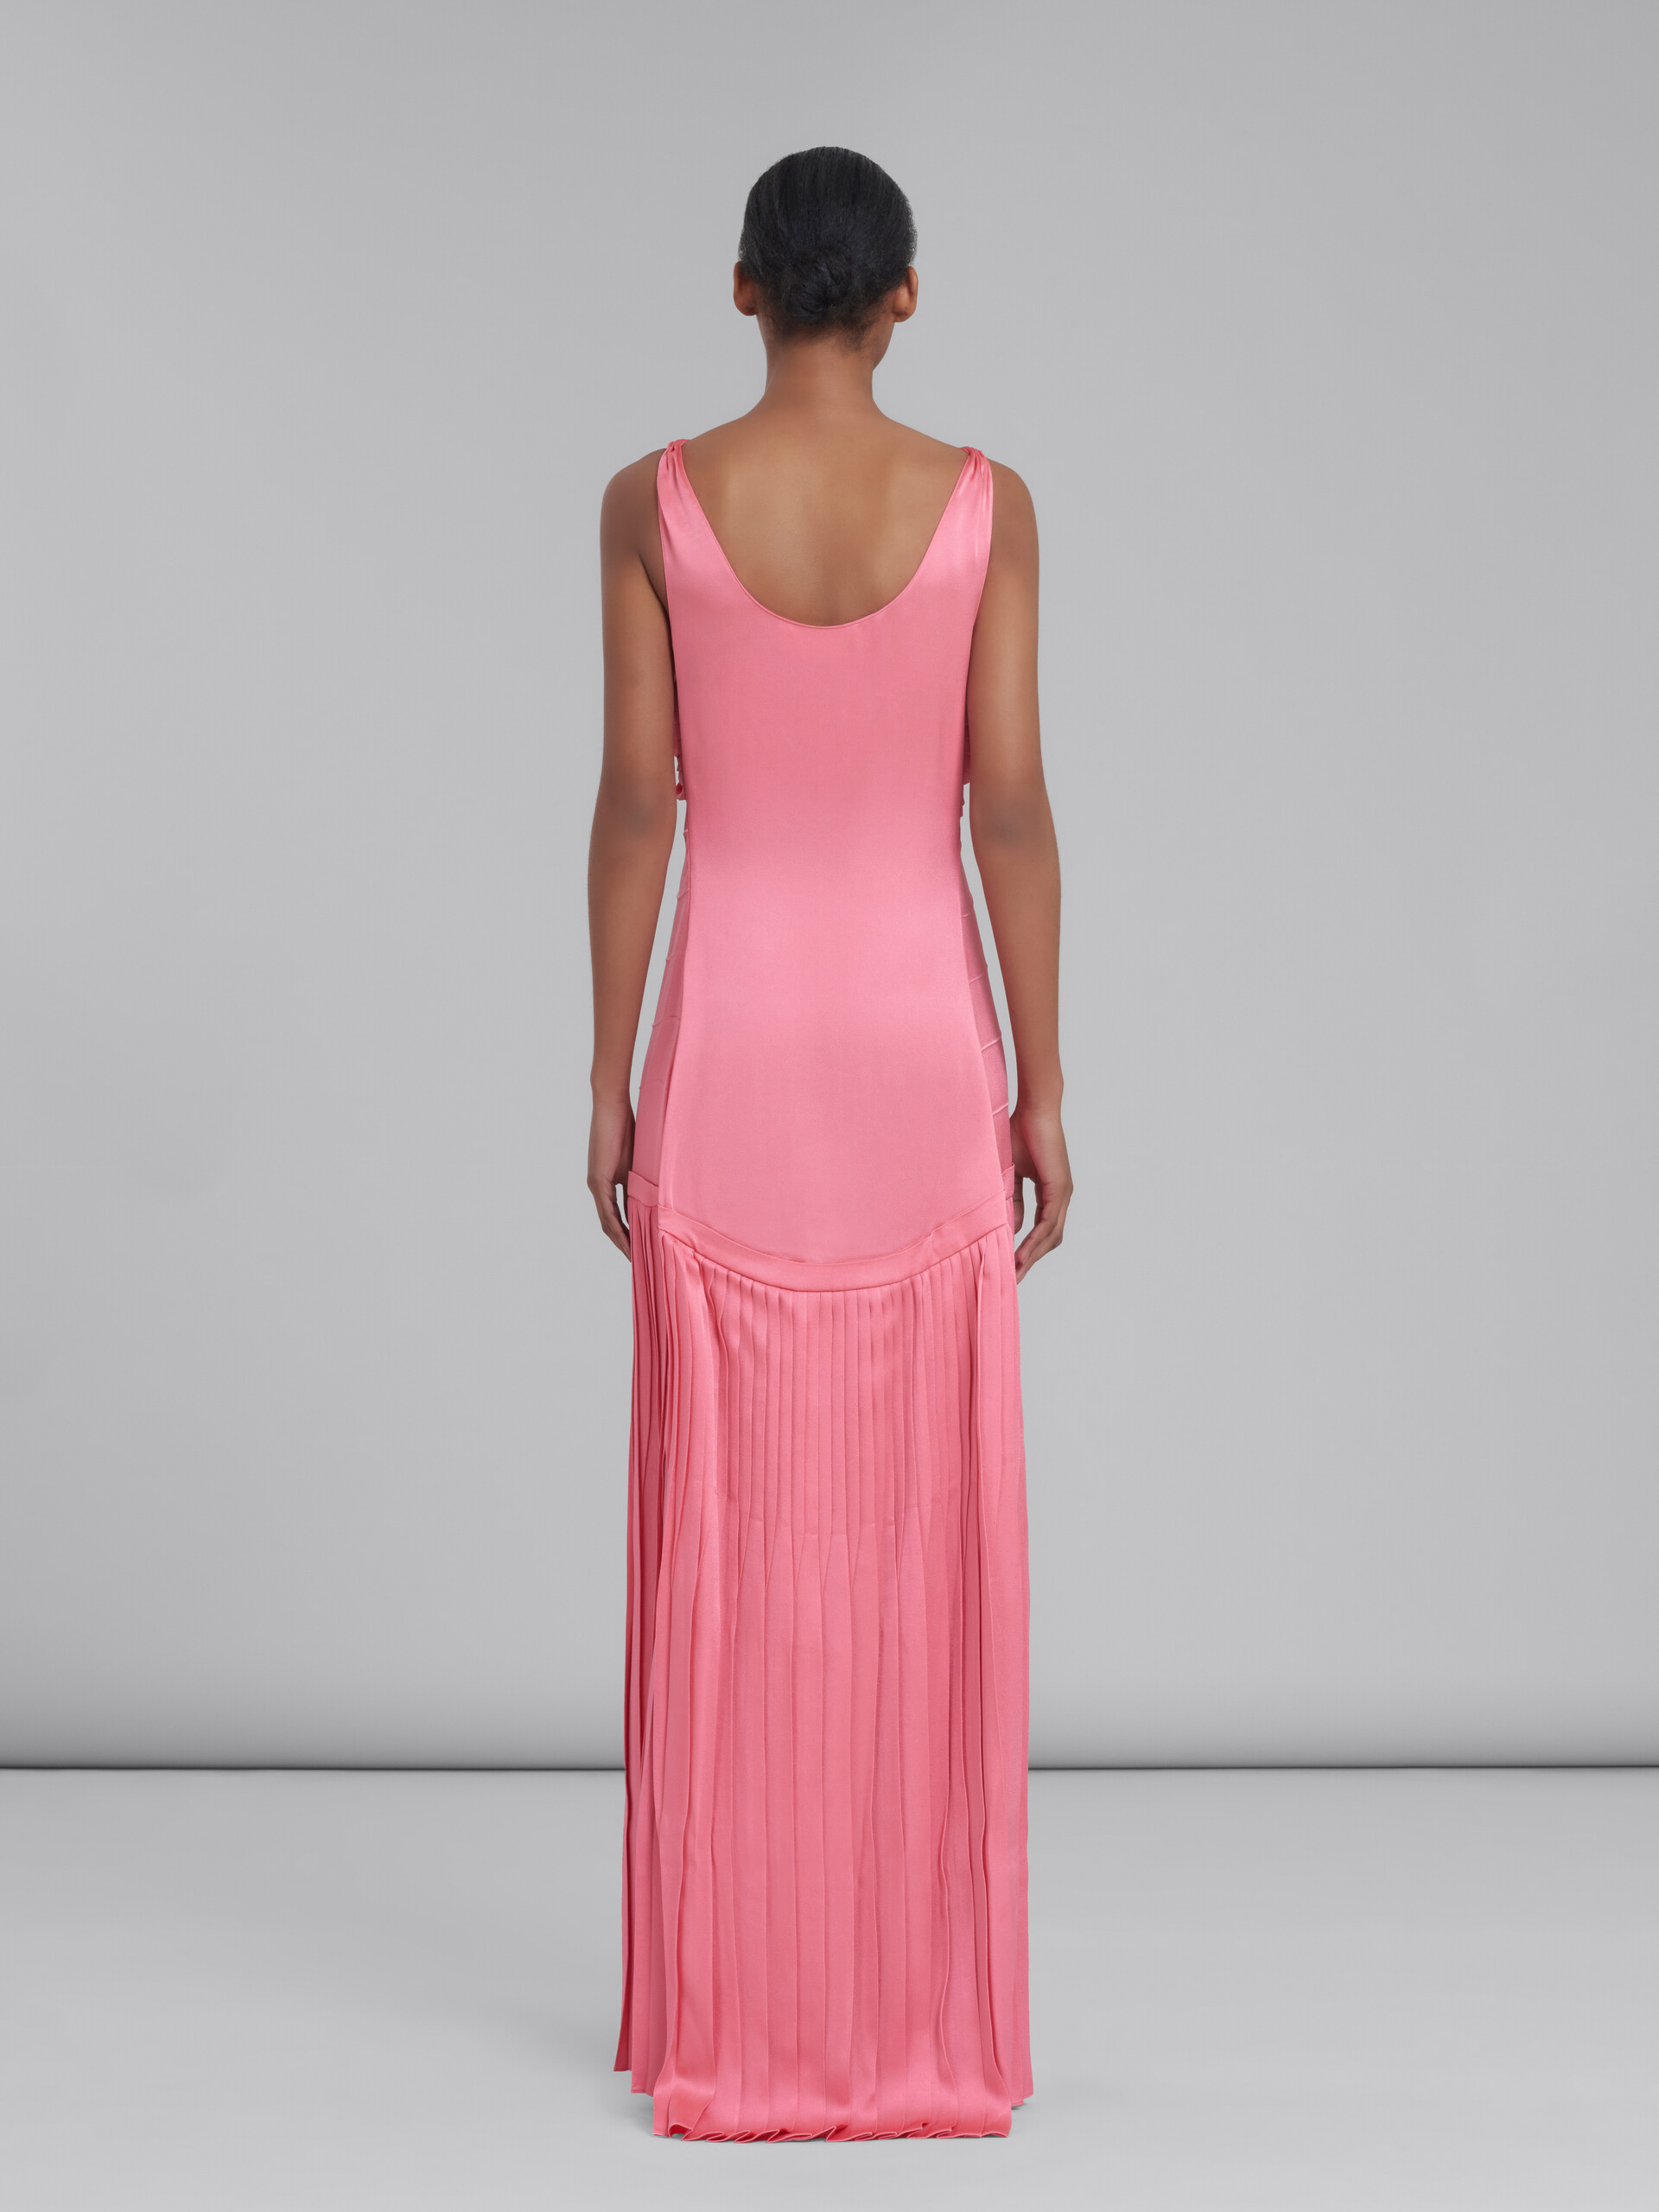 Draped long dress in pink crêpe satin - Dresses - Image 3